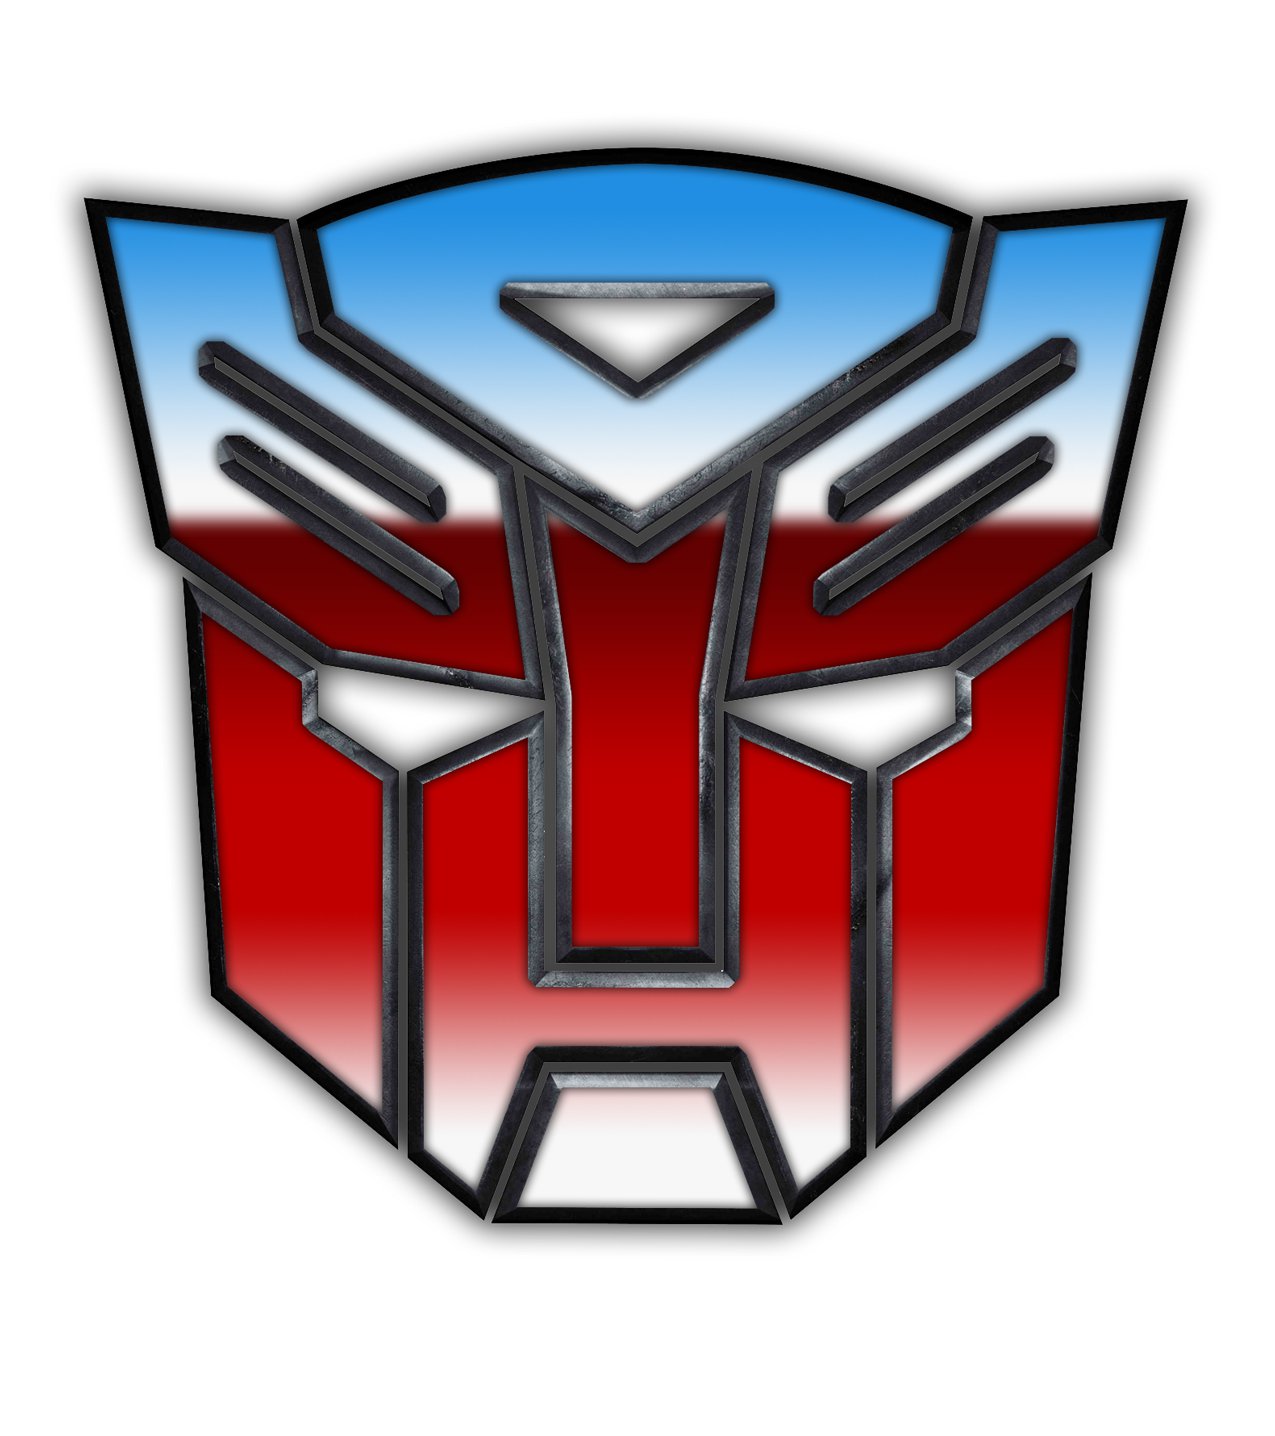 Transformers autobots logo clipart - ClipartFox